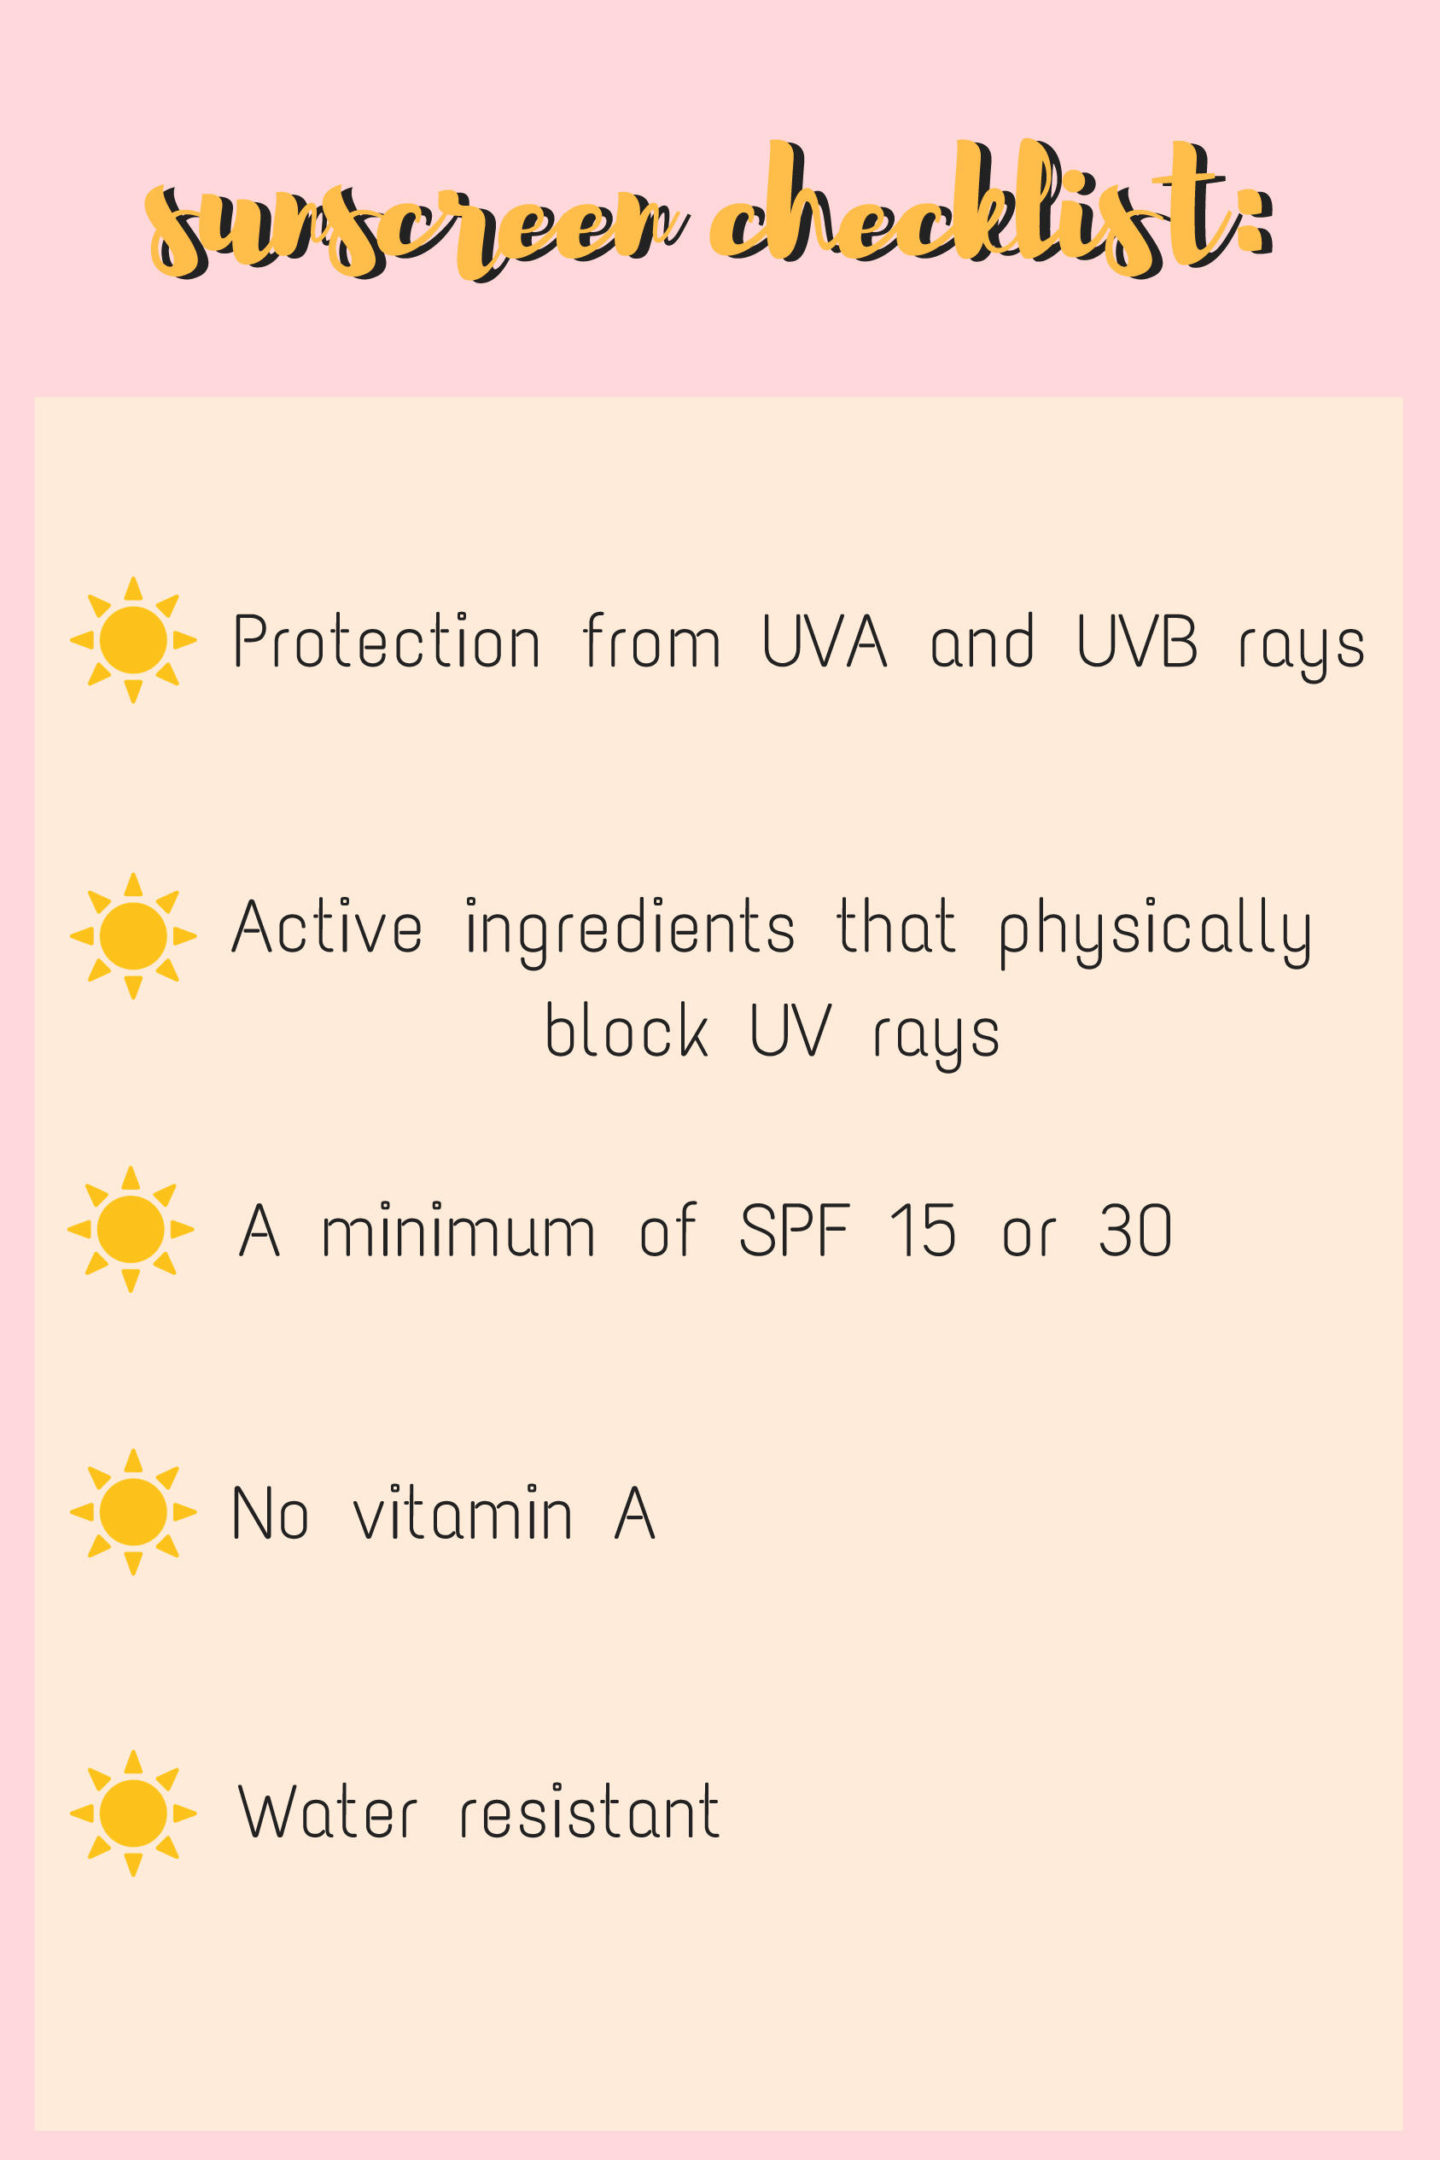 sunscreen checklist